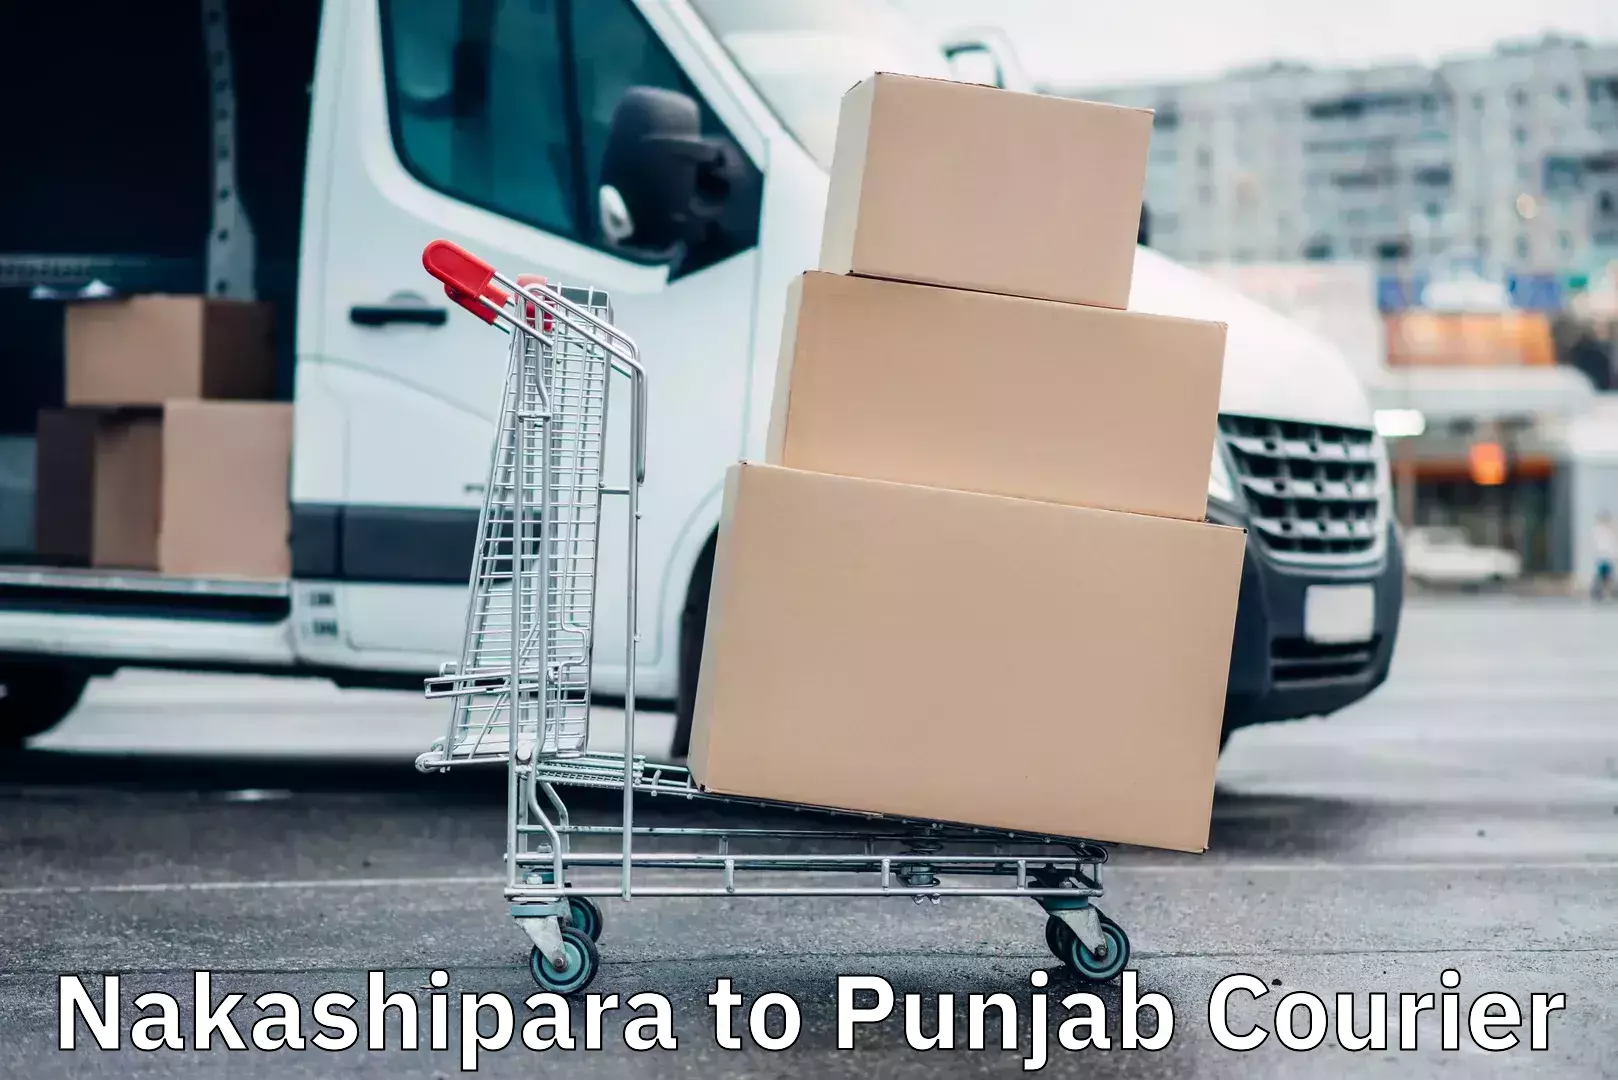 Fastest parcel delivery Nakashipara to Punjab